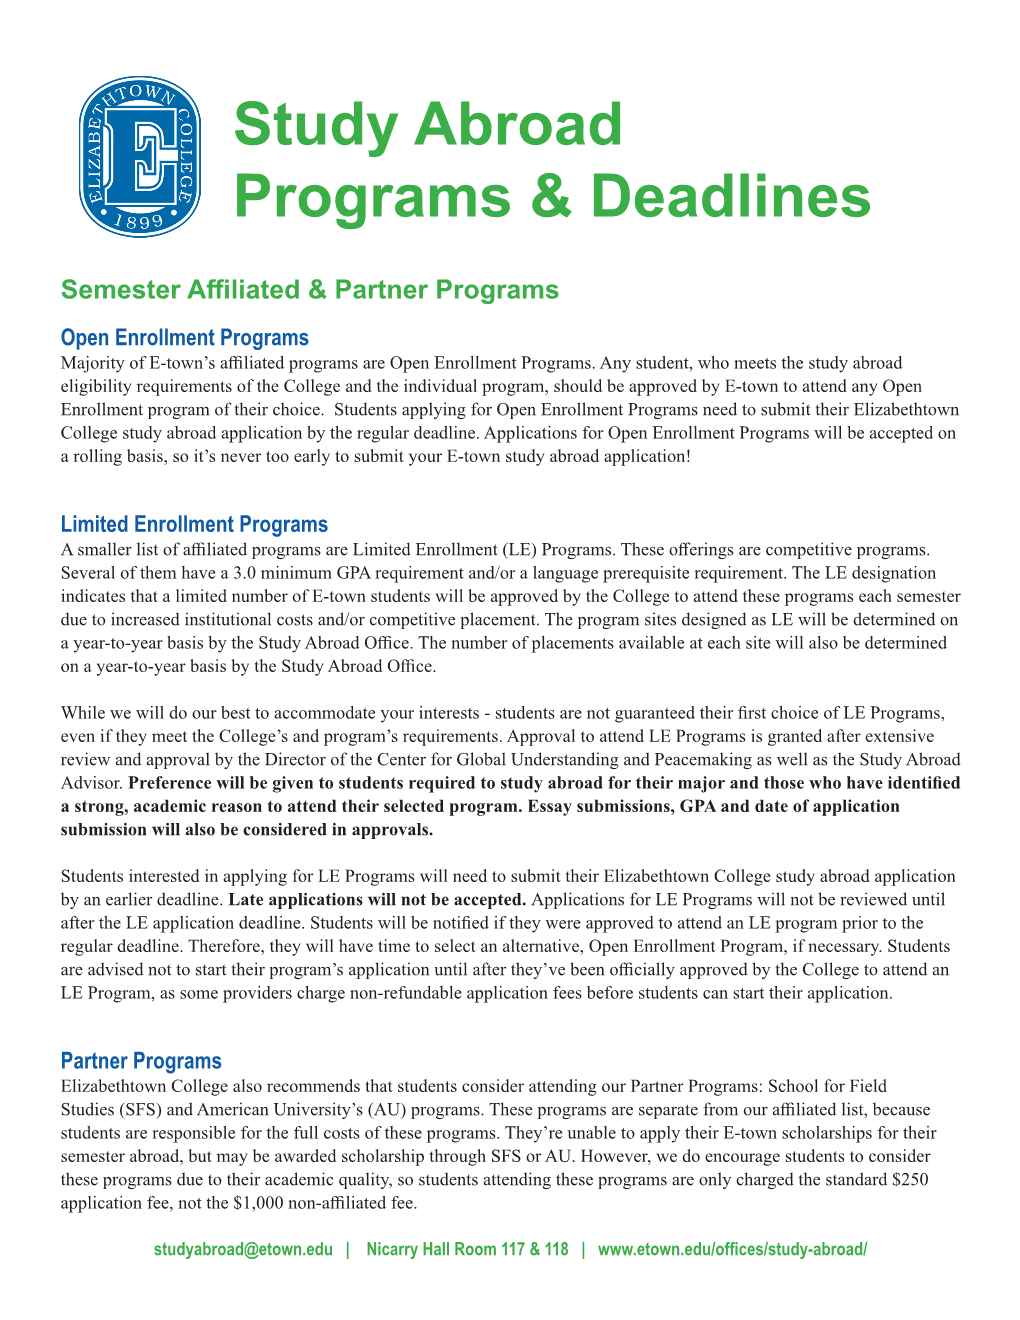 Study Abroad Programs & Deadlines